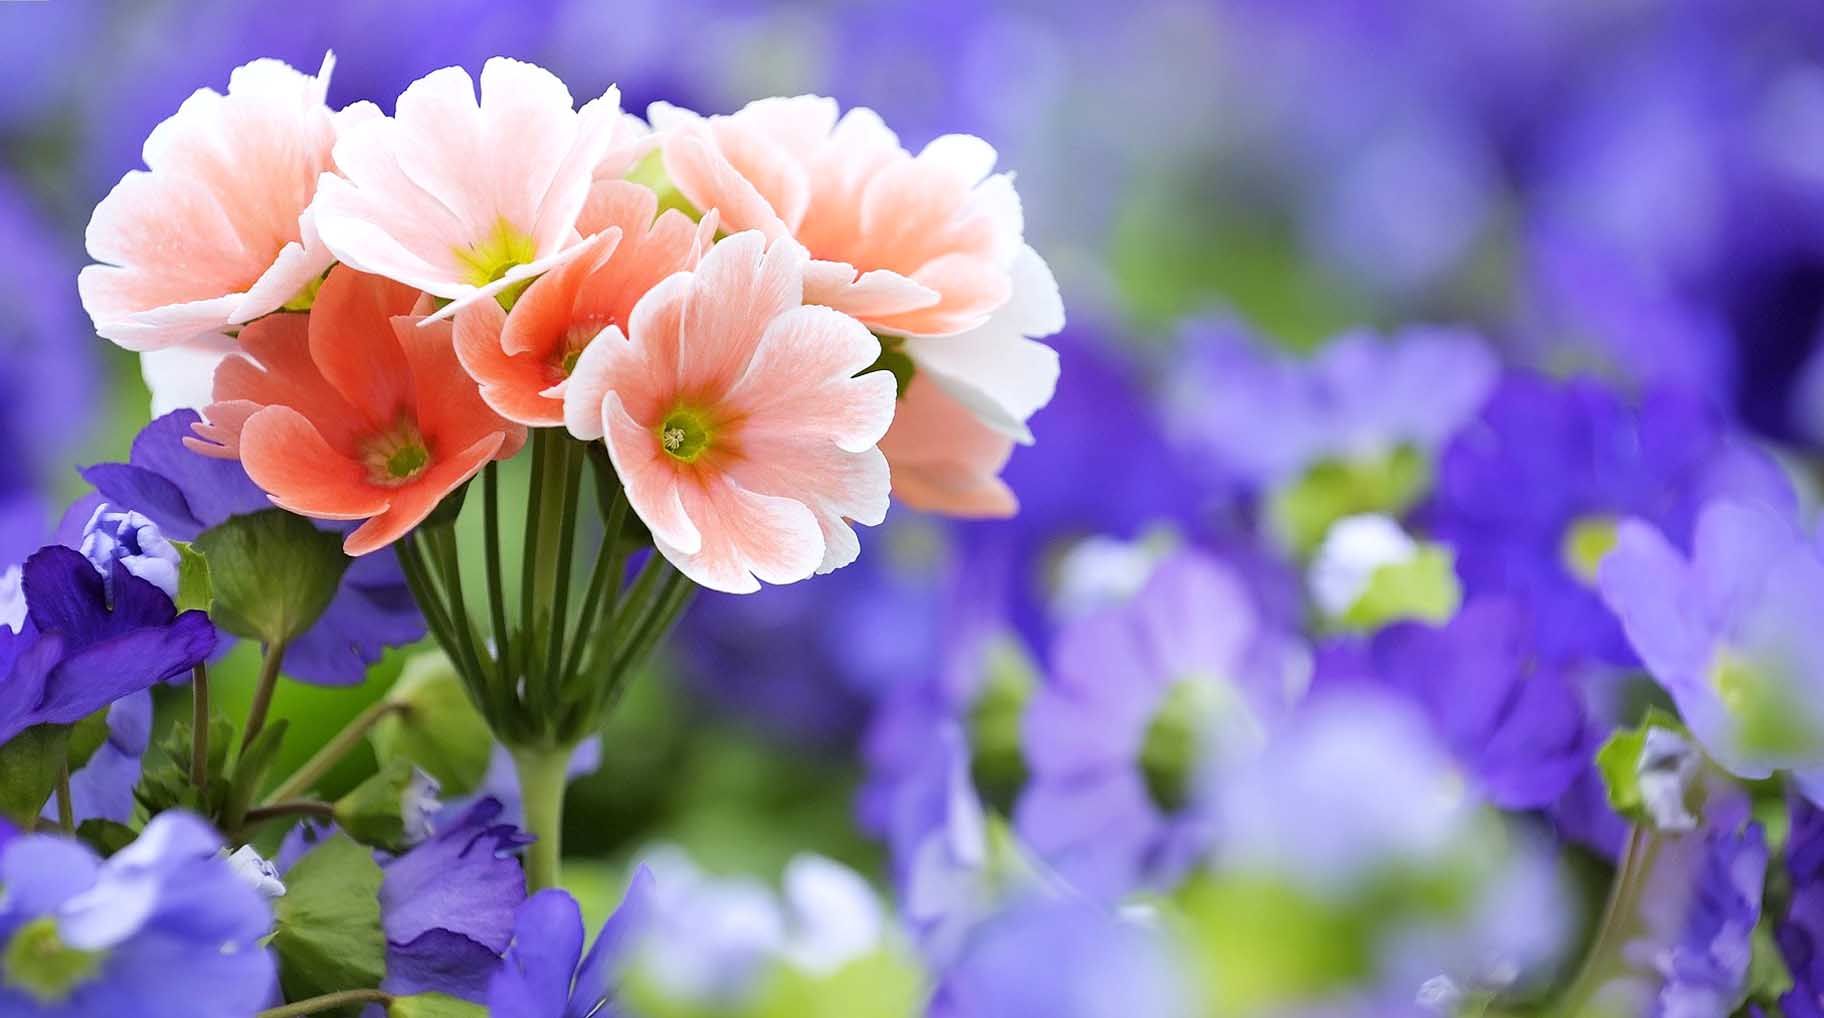 50 Beautiful Free HD Flower Wallpapers - DesignMaz